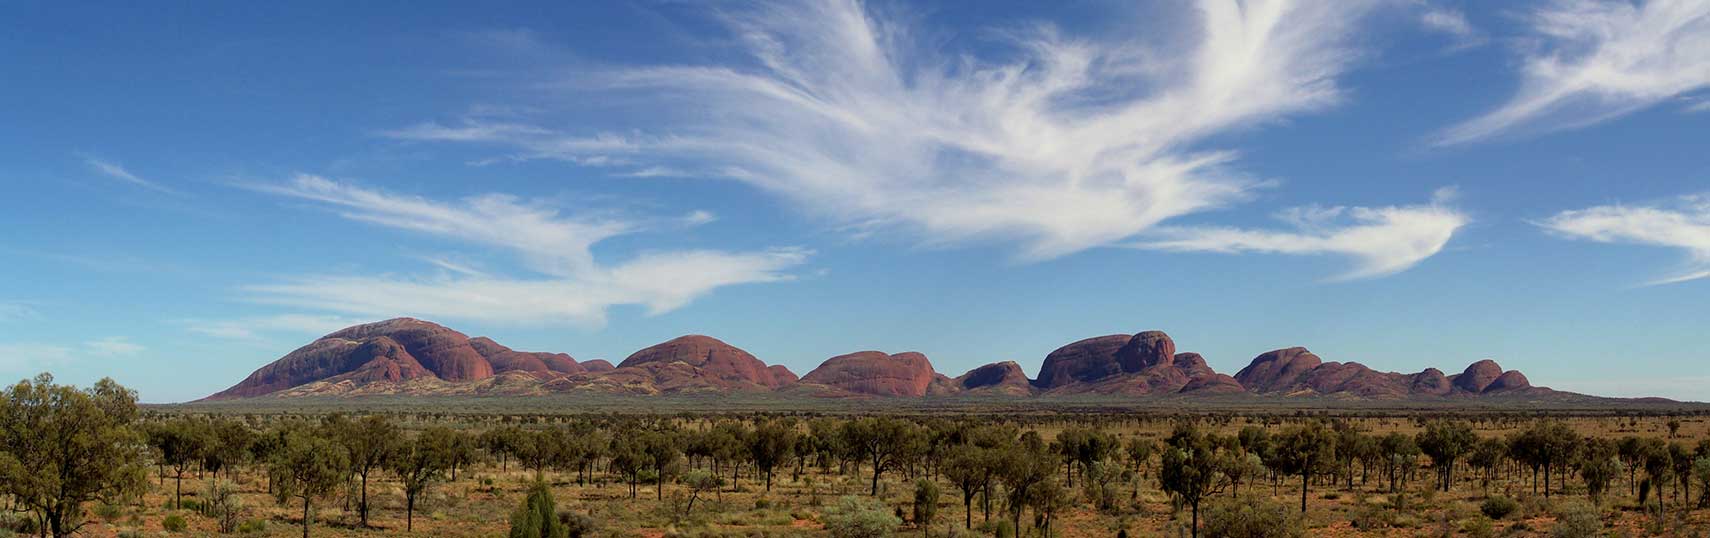 Kata Tjuta (Mount Olga), Northern Territory, central Australia.